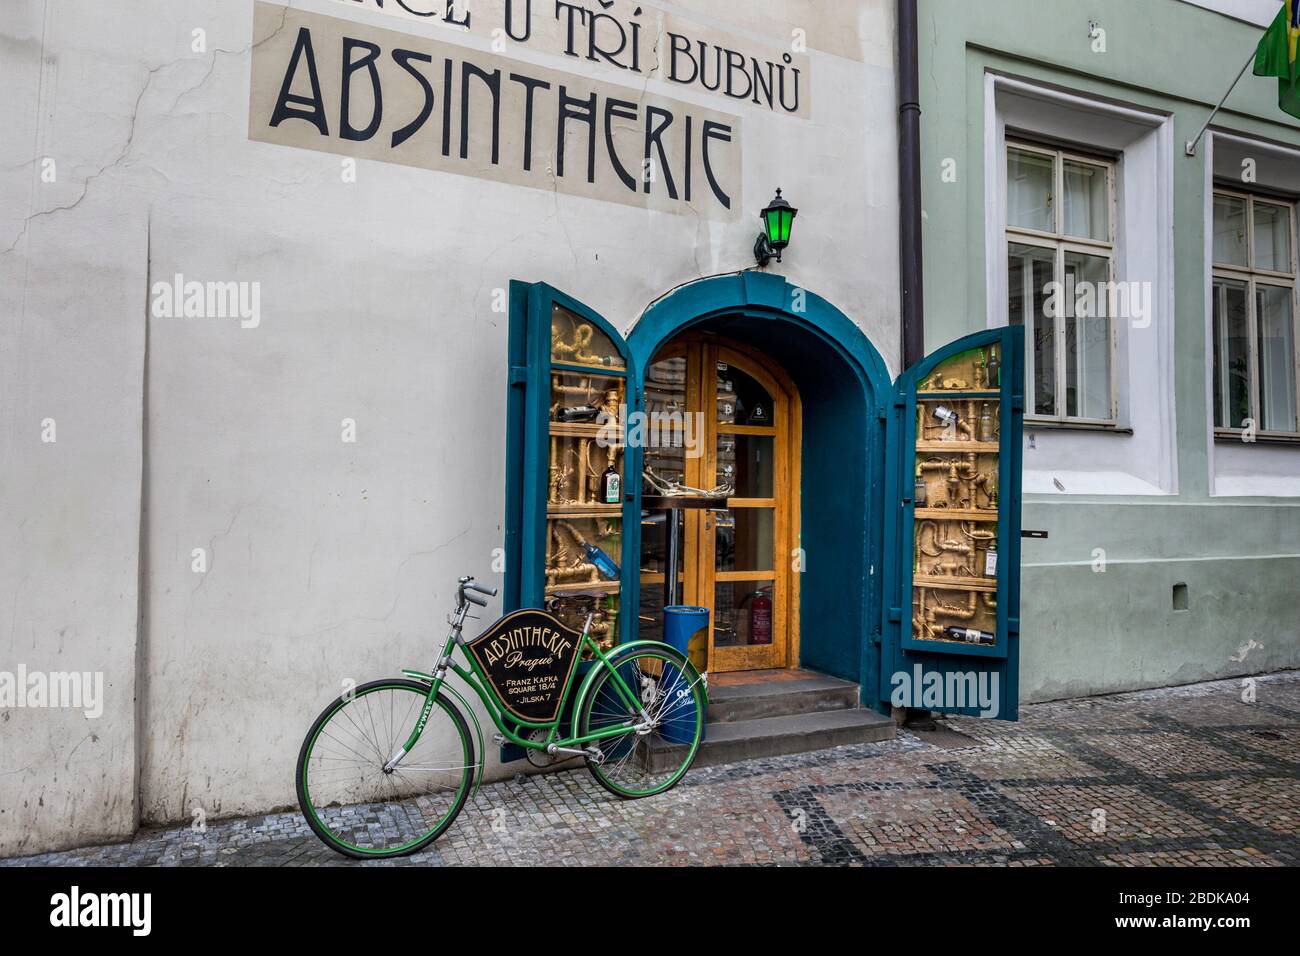 Absinthe shop in the Old Town, Prague, Czech Republic Stock Photo